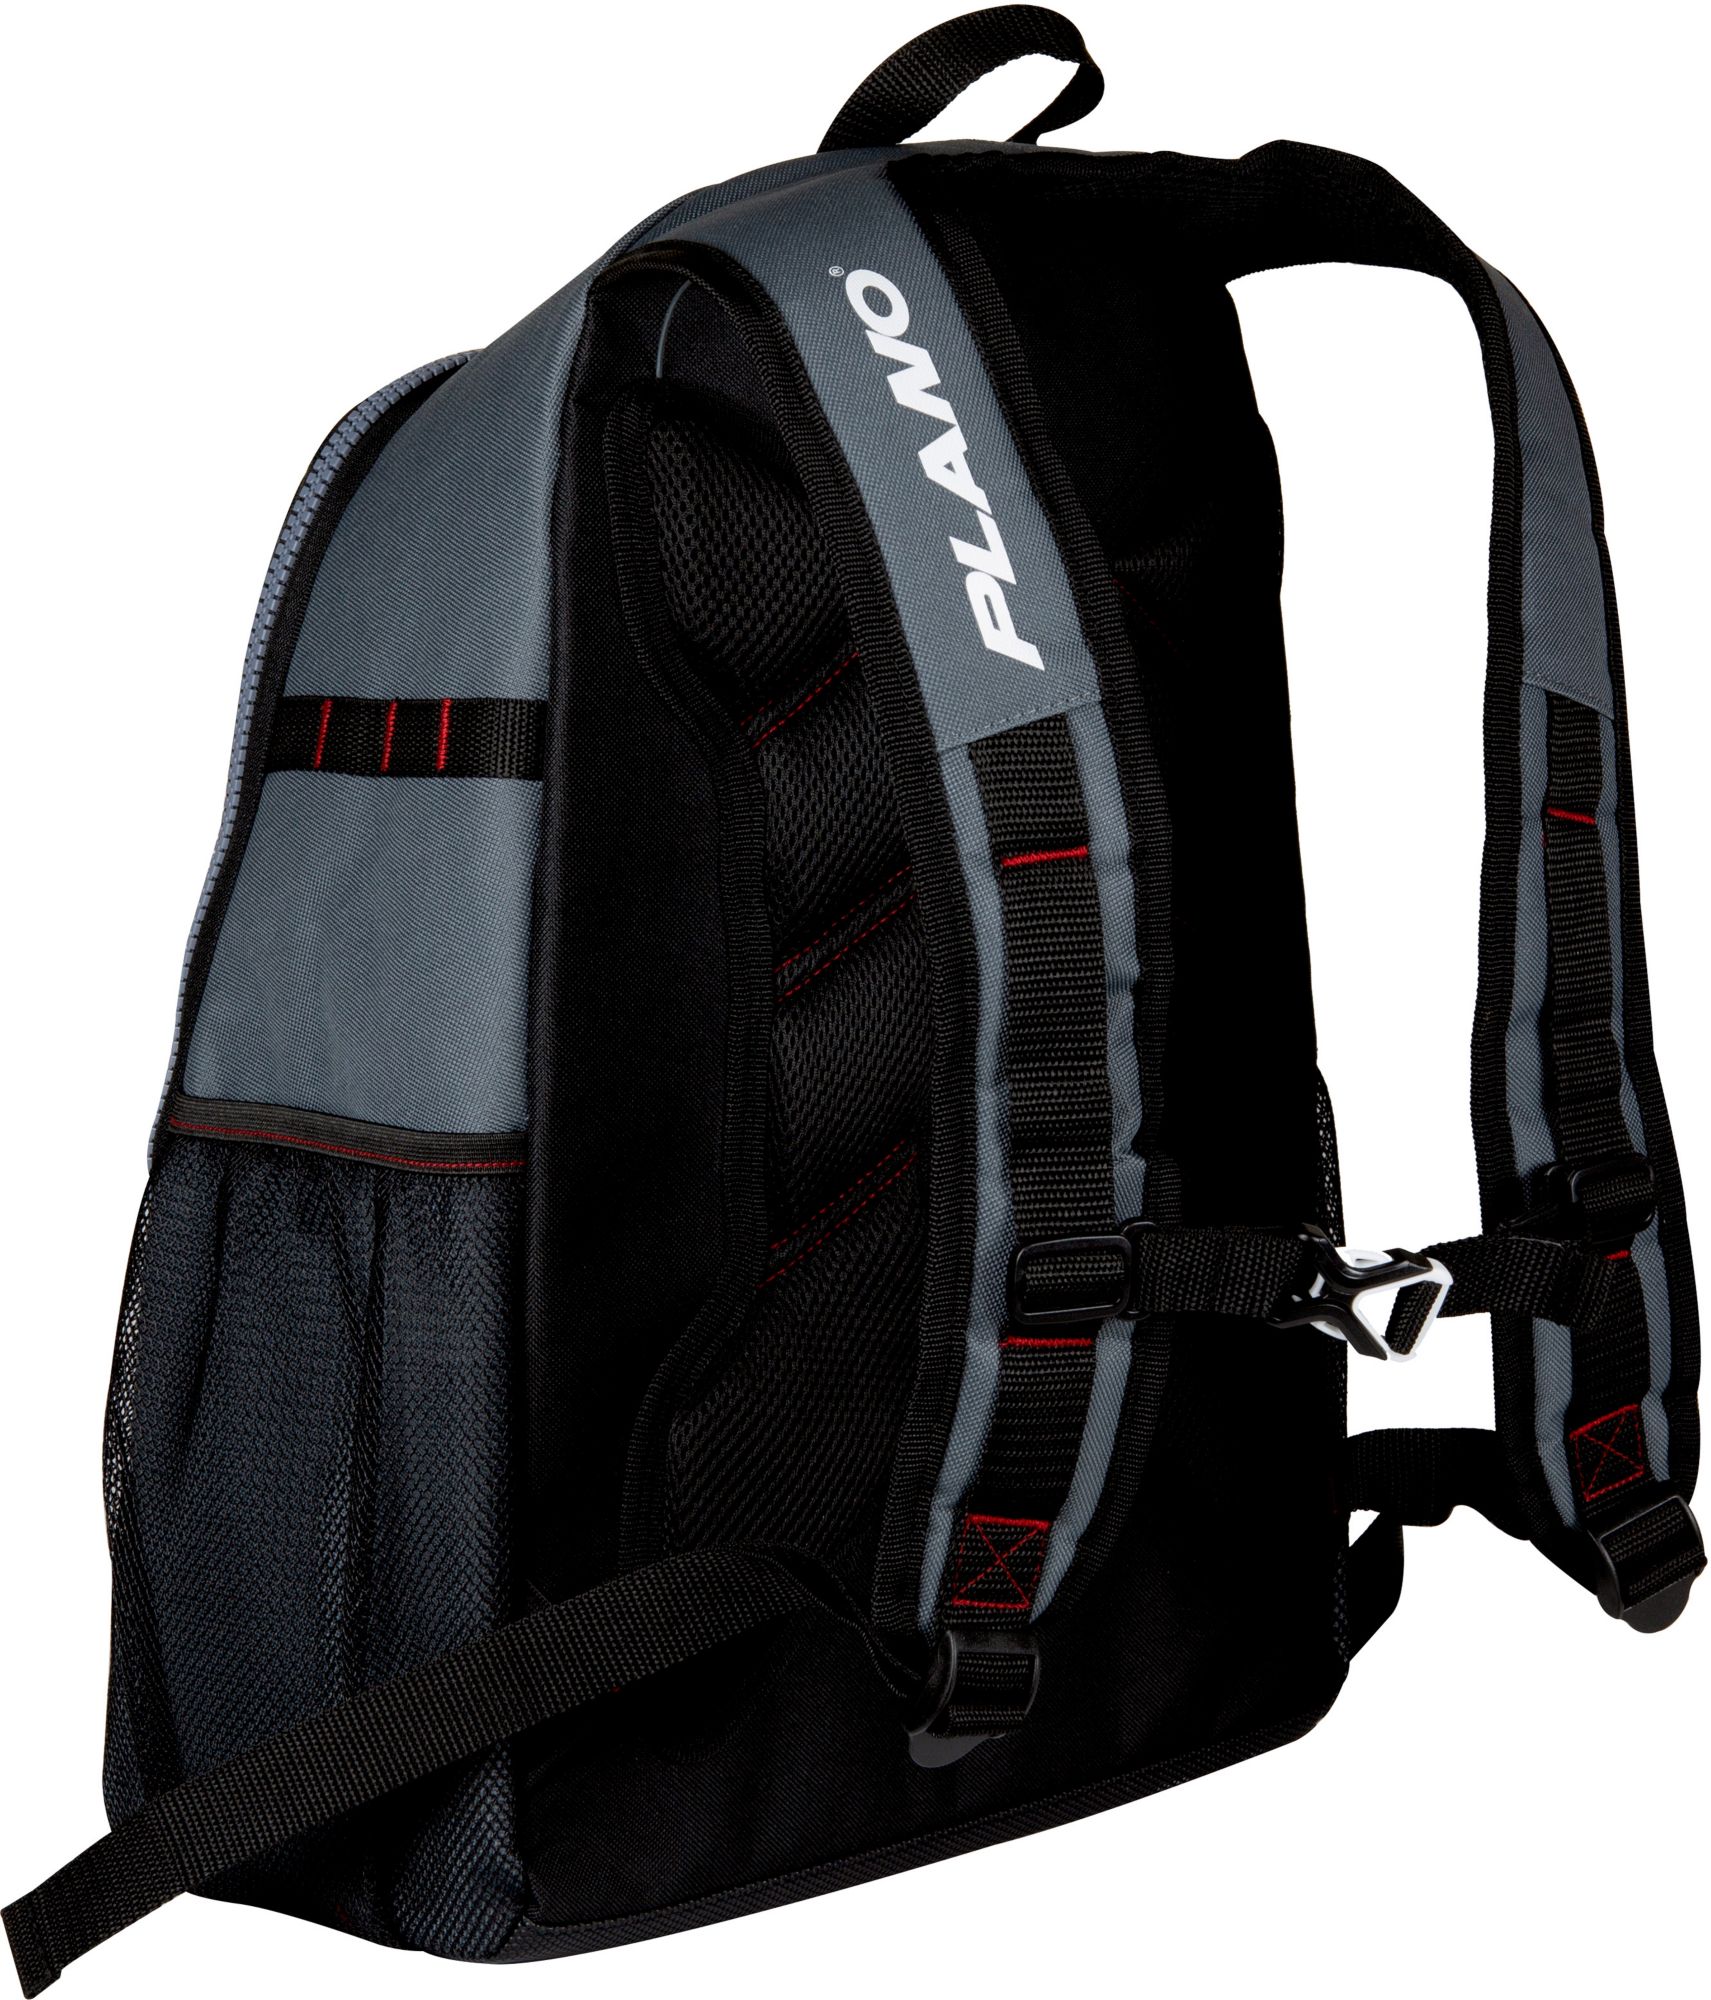 Dick's Sporting Goods Plano Weekend Series 3700 Backpack Tackle Bag